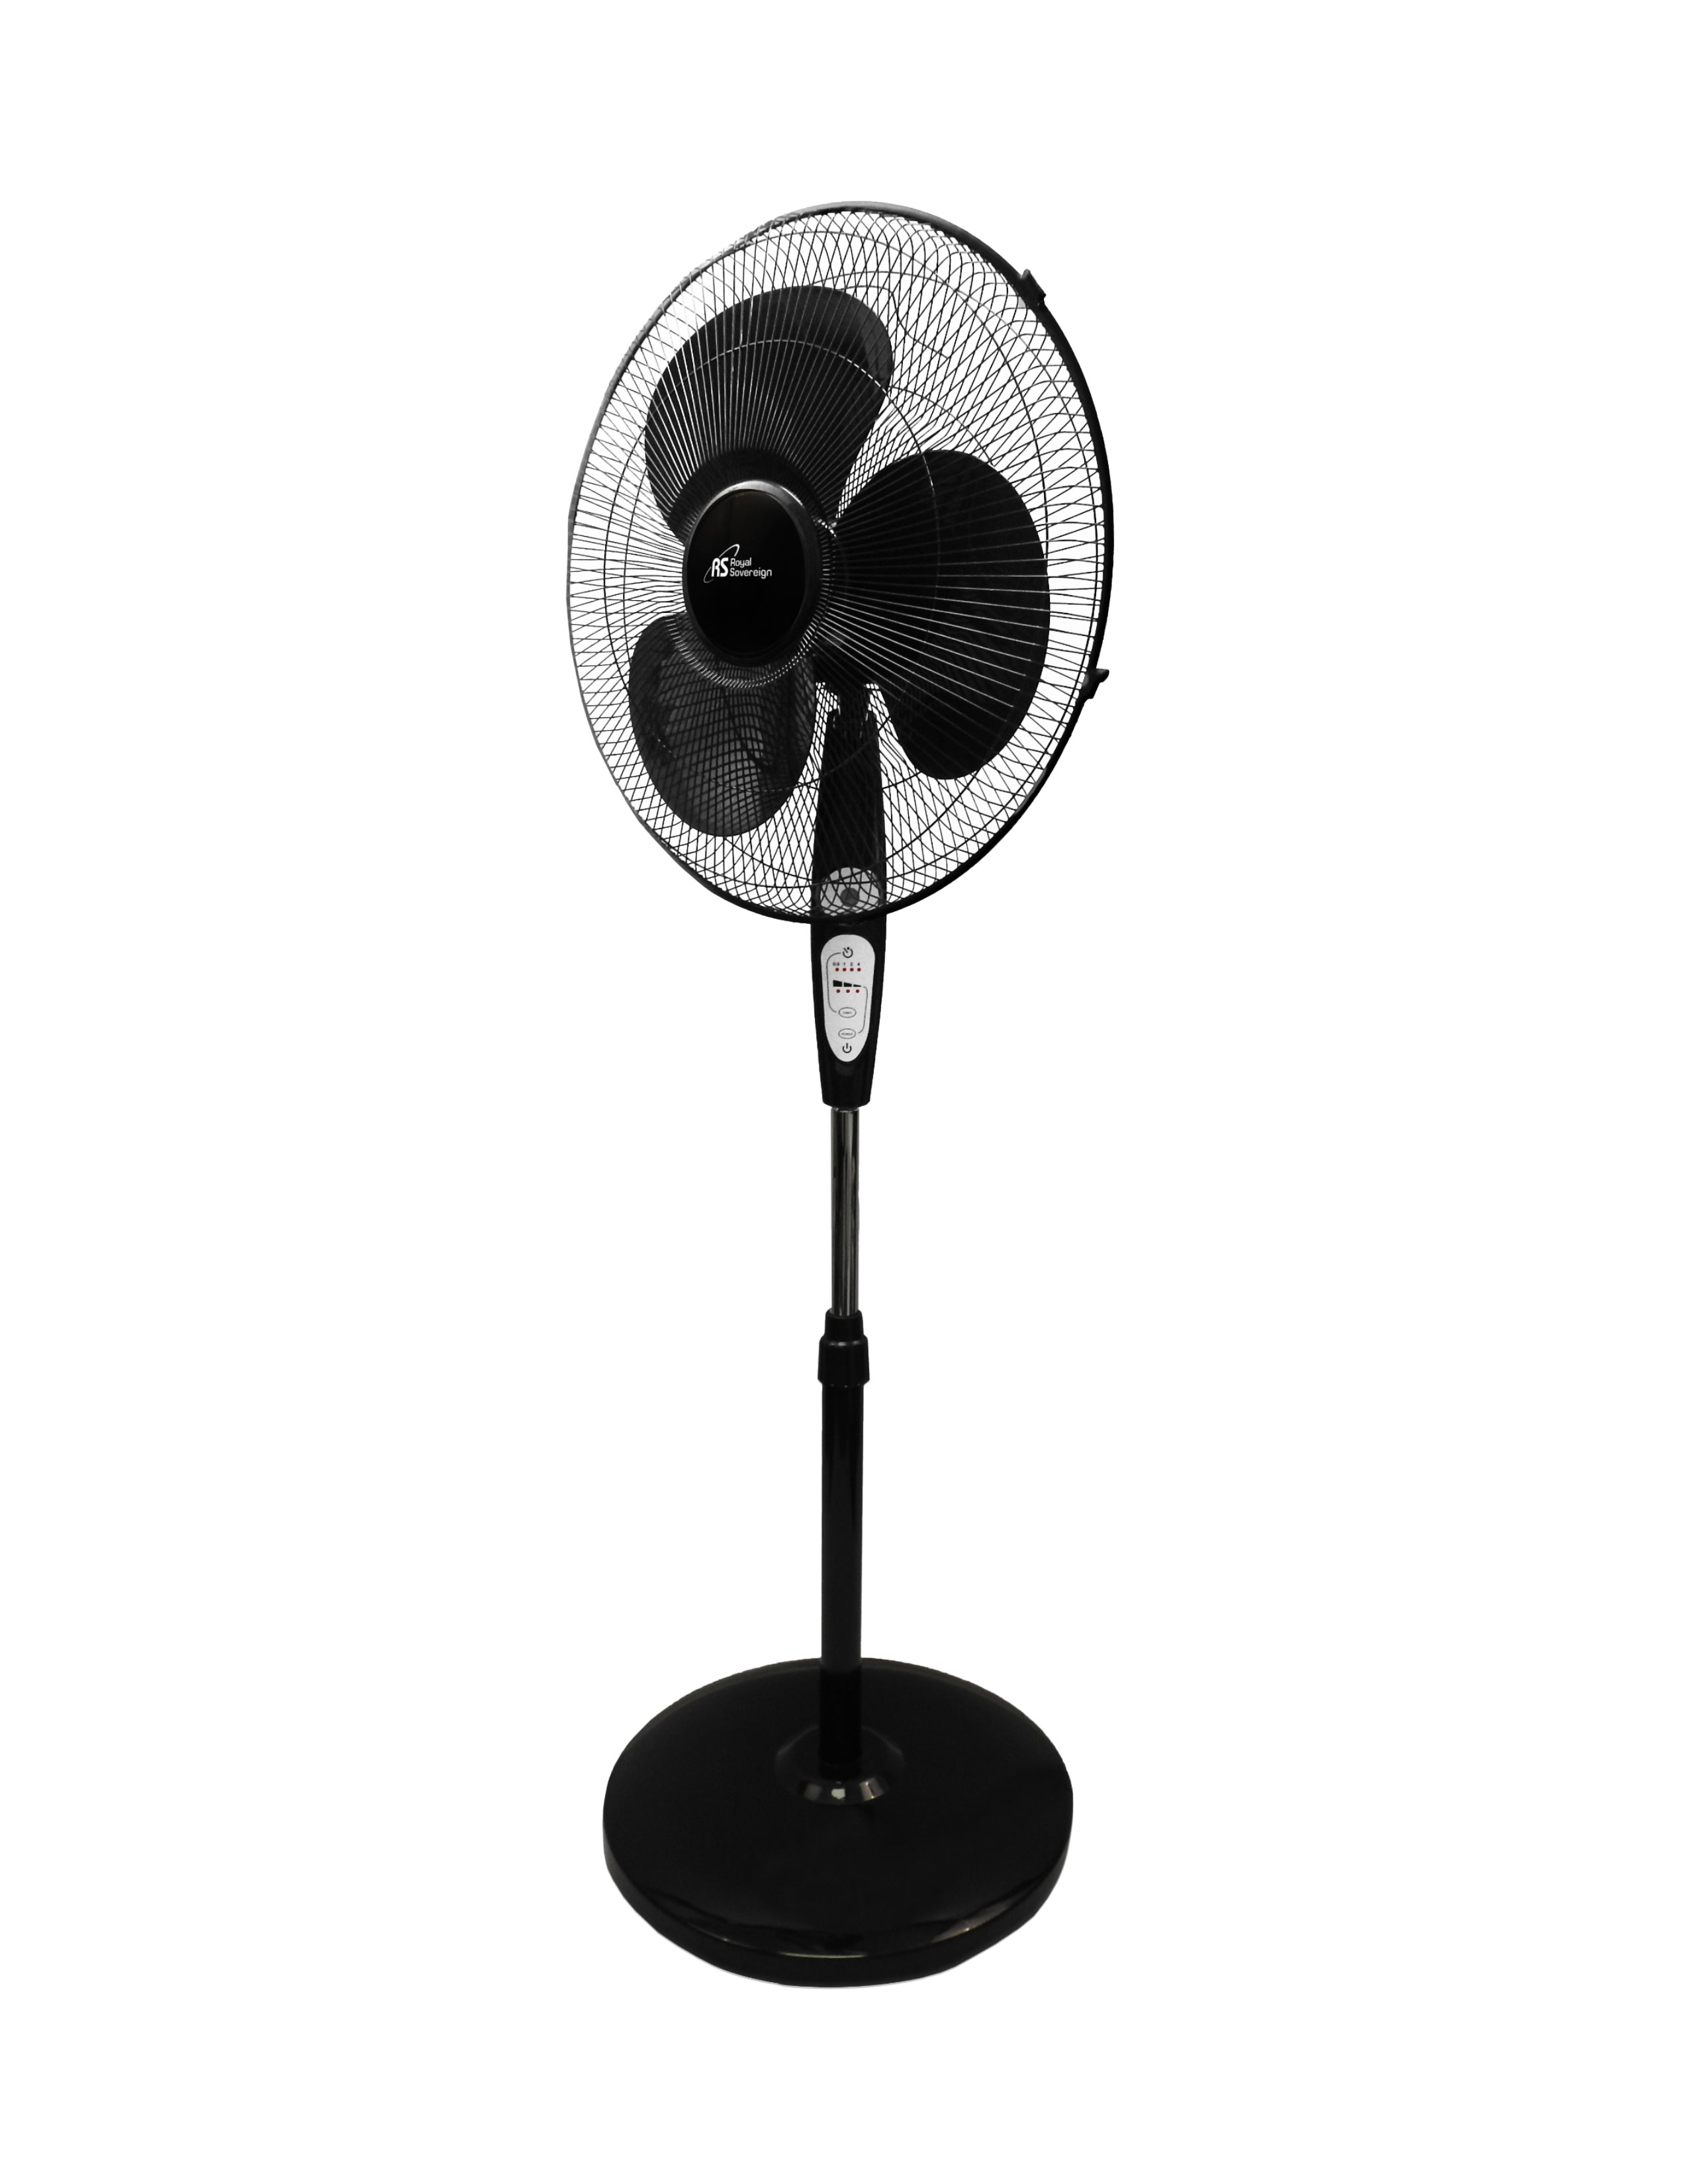 PFN-48B/ 18” Digital Oscillating Pedestal Fan